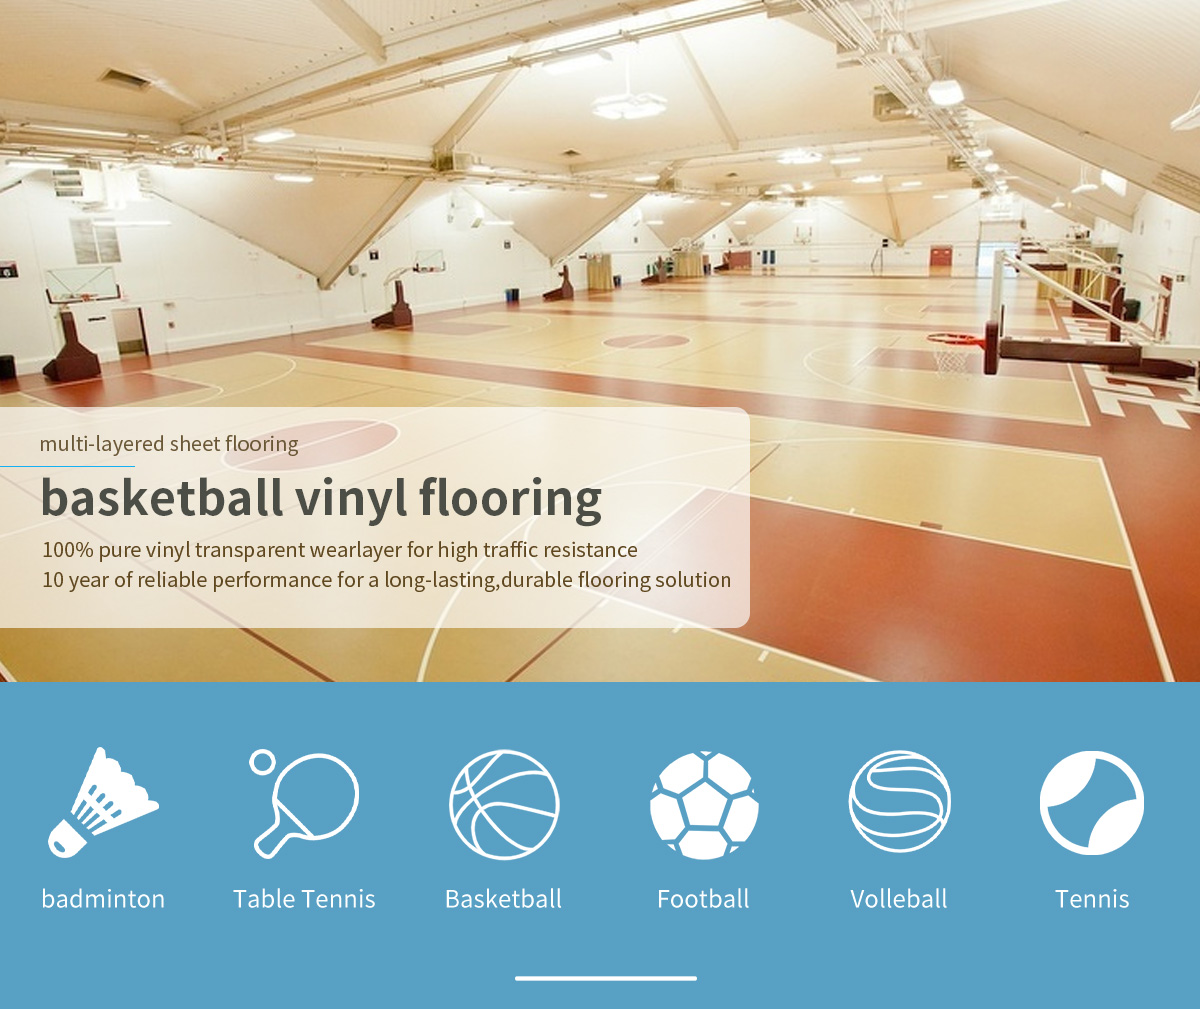 37basketball-vinyl-flooring_01(1).jpg